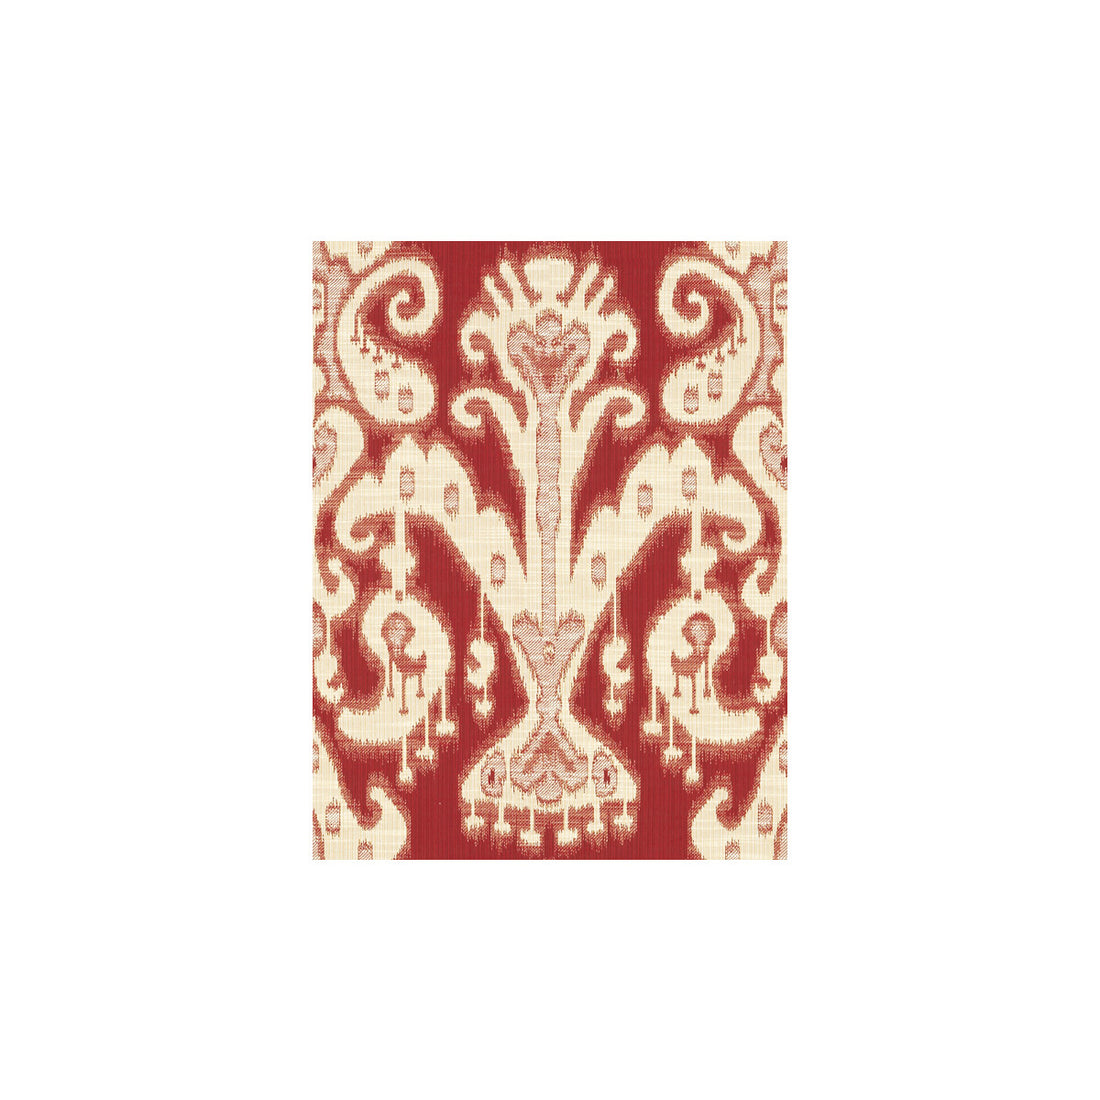 Kravet Design fabric in 31446-19 color - pattern 31446.19.0 - by Kravet Design in the Gis collection